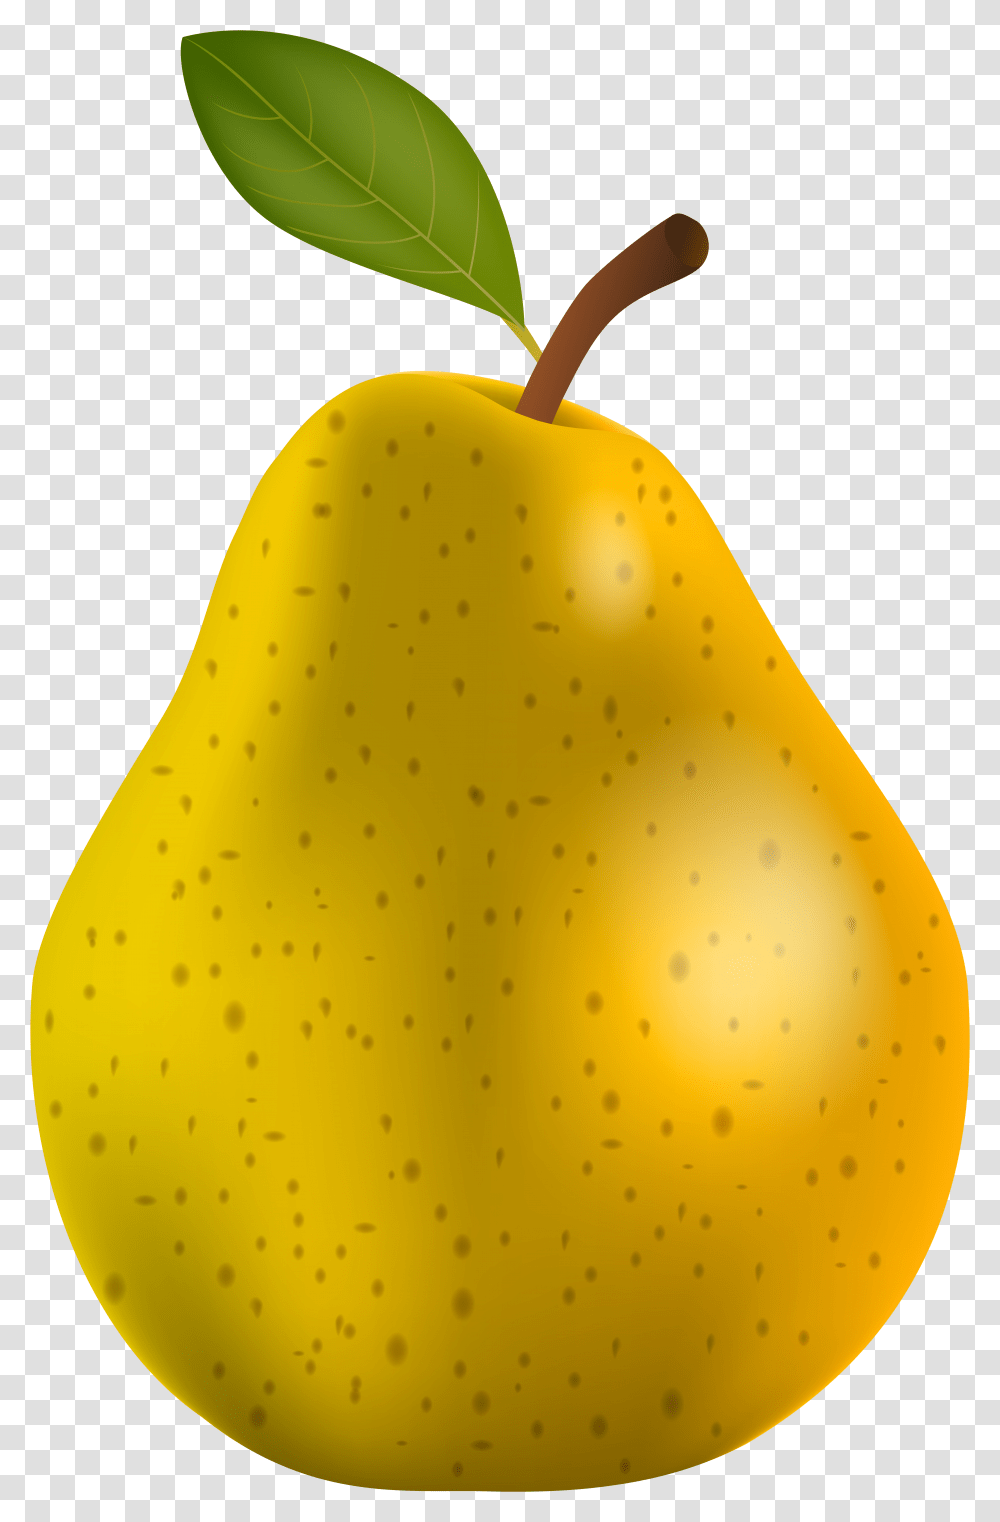 Pear Clipart Different Kind Fruit Pears Images Clip Art Transparent Png